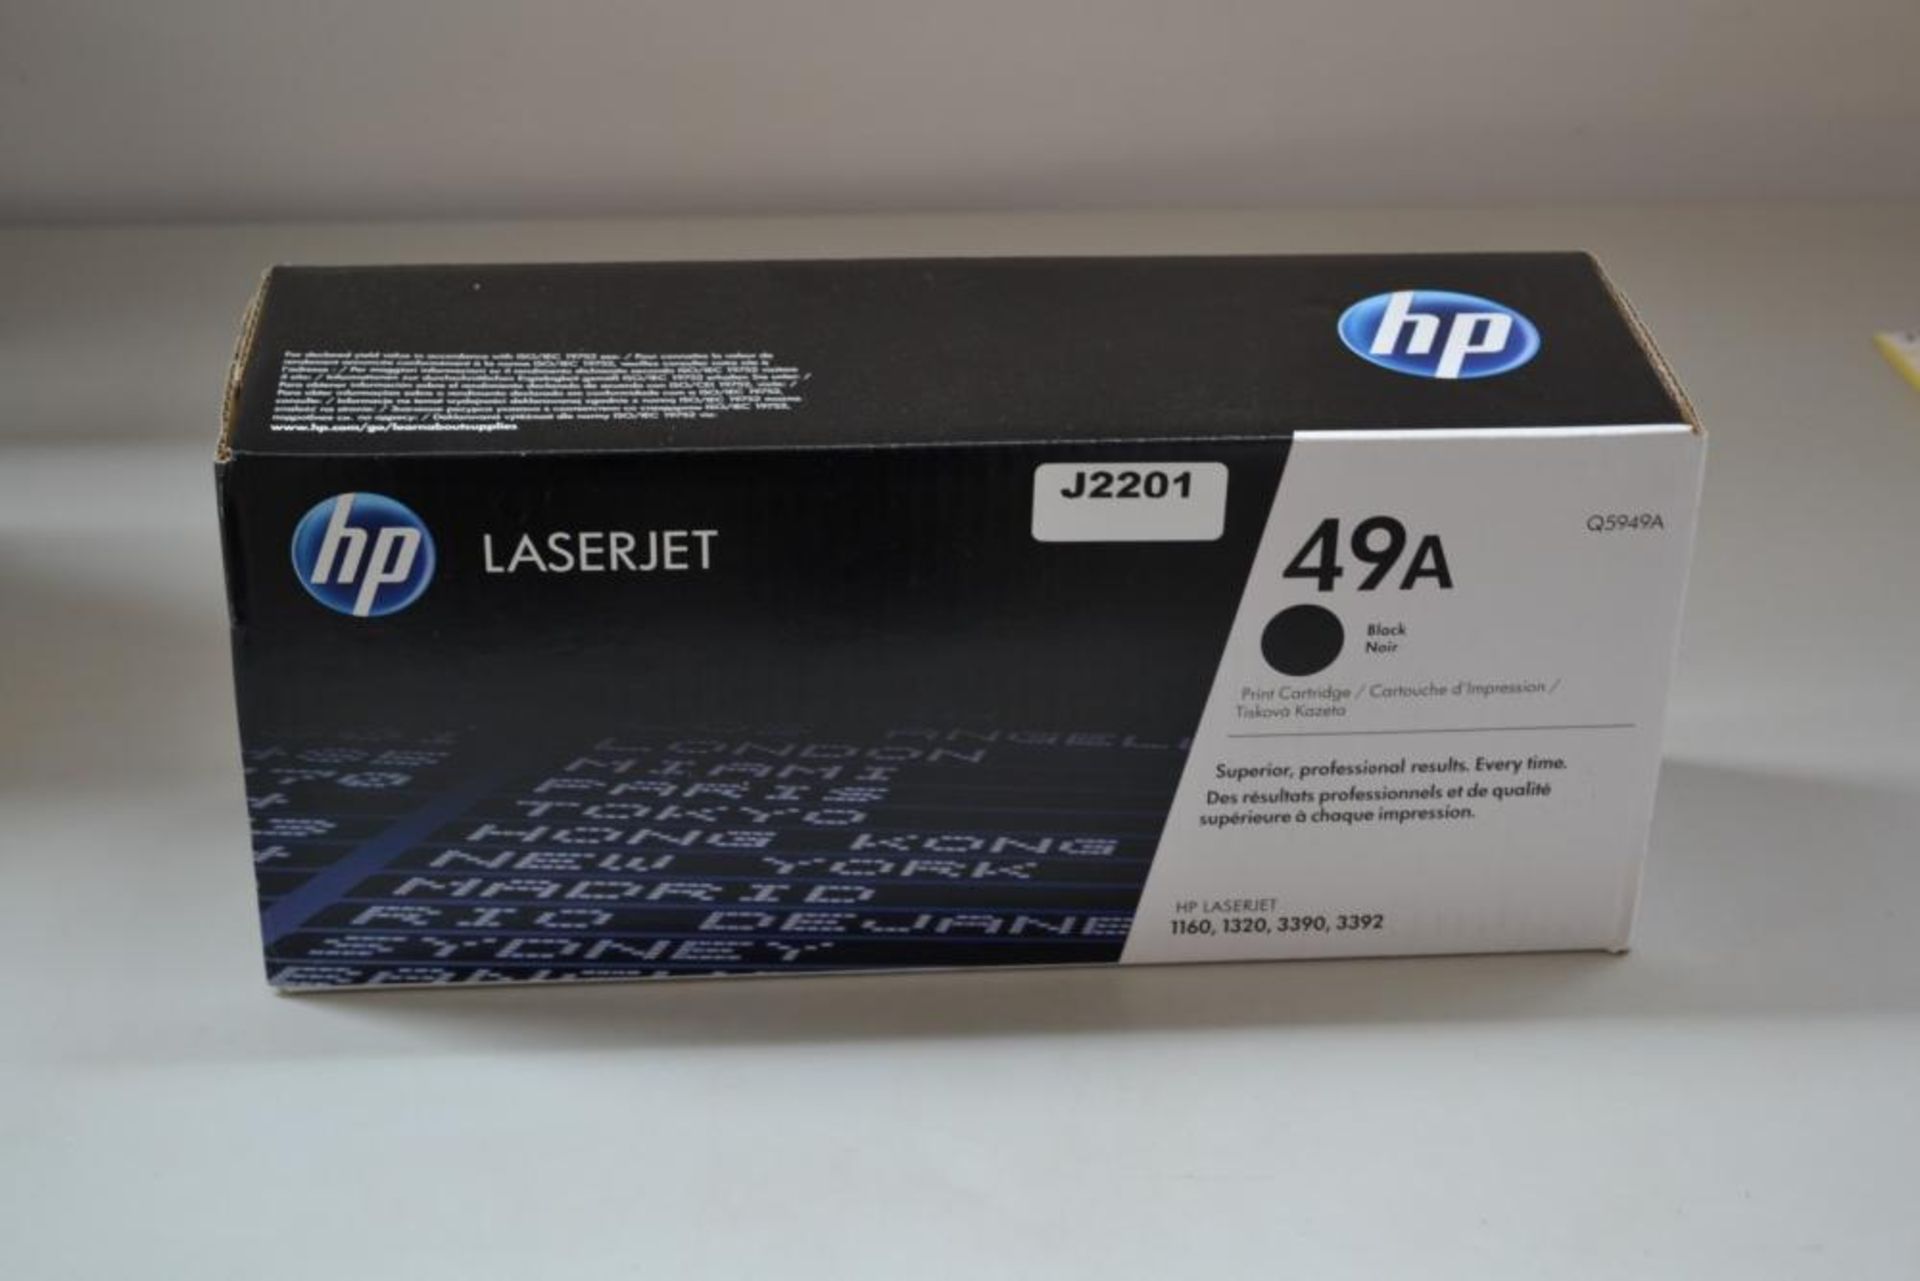 1 x HP 49A Black Original LaserJet Printer Toner Cartridge Q5949A (RRP:£91.00) - New In Box - Ref J2